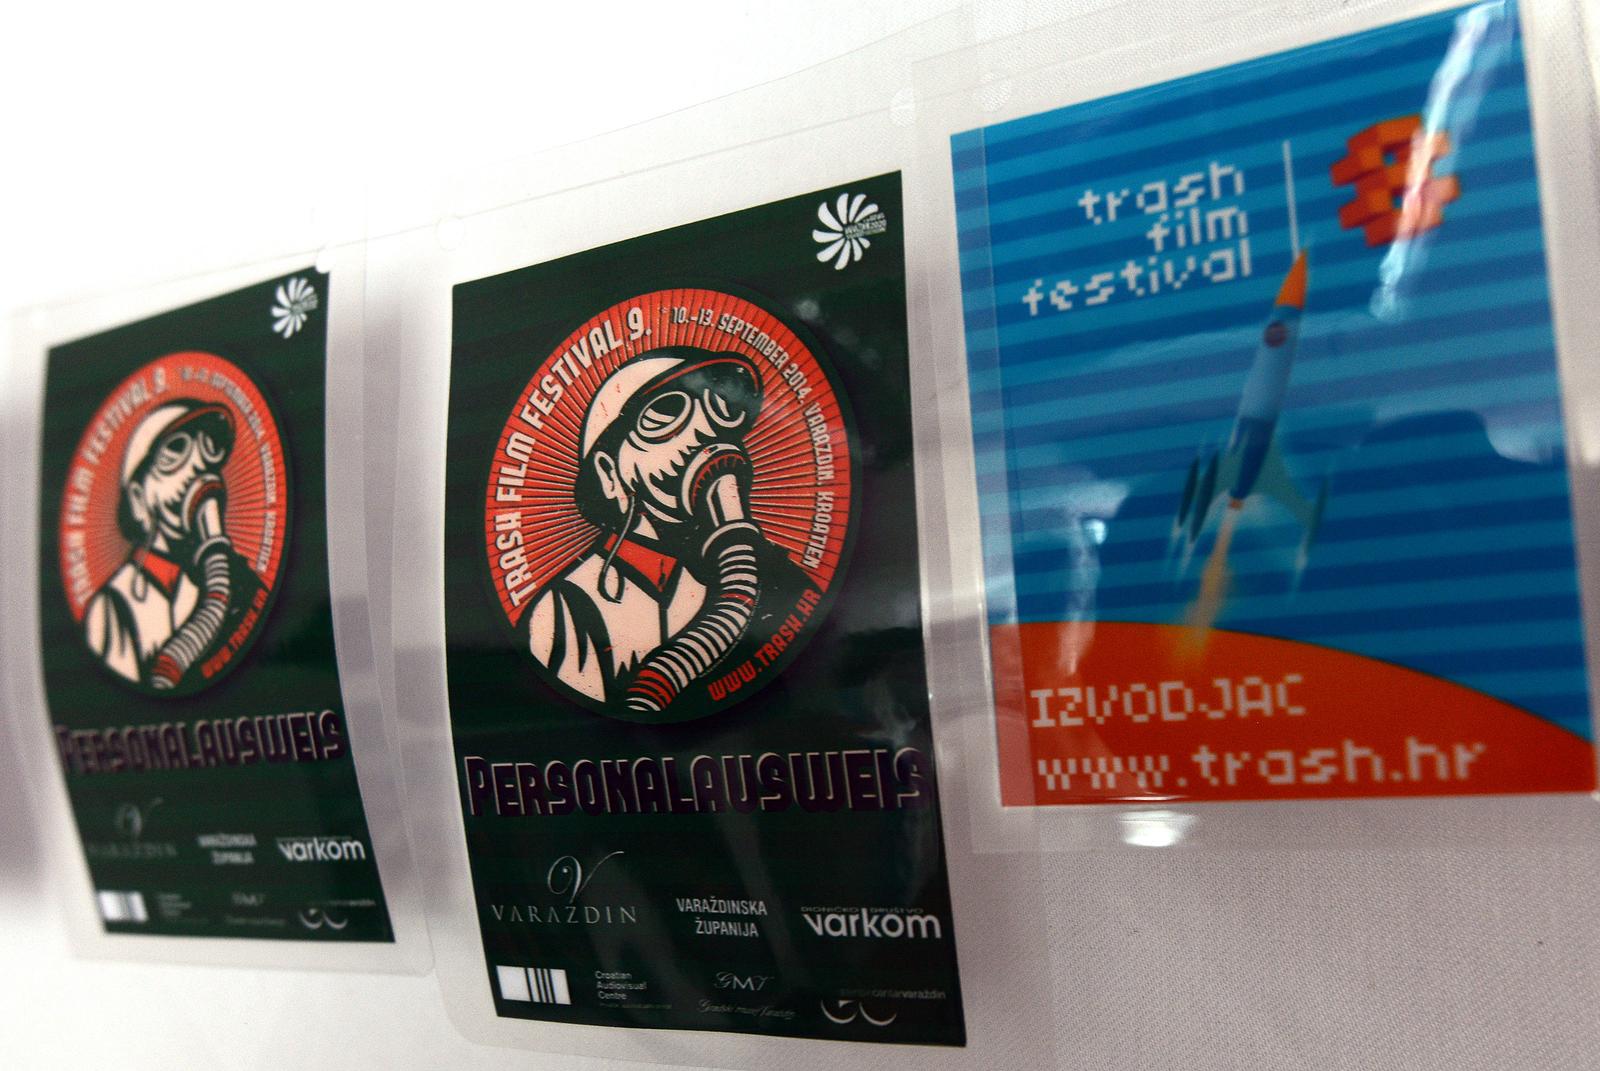 09.09.2015., Varazdin - Otvorenjem izlozbe 10. godina TFF zapoceo je Trash film festival. Photo: Marko Jurinec/PIXSELL